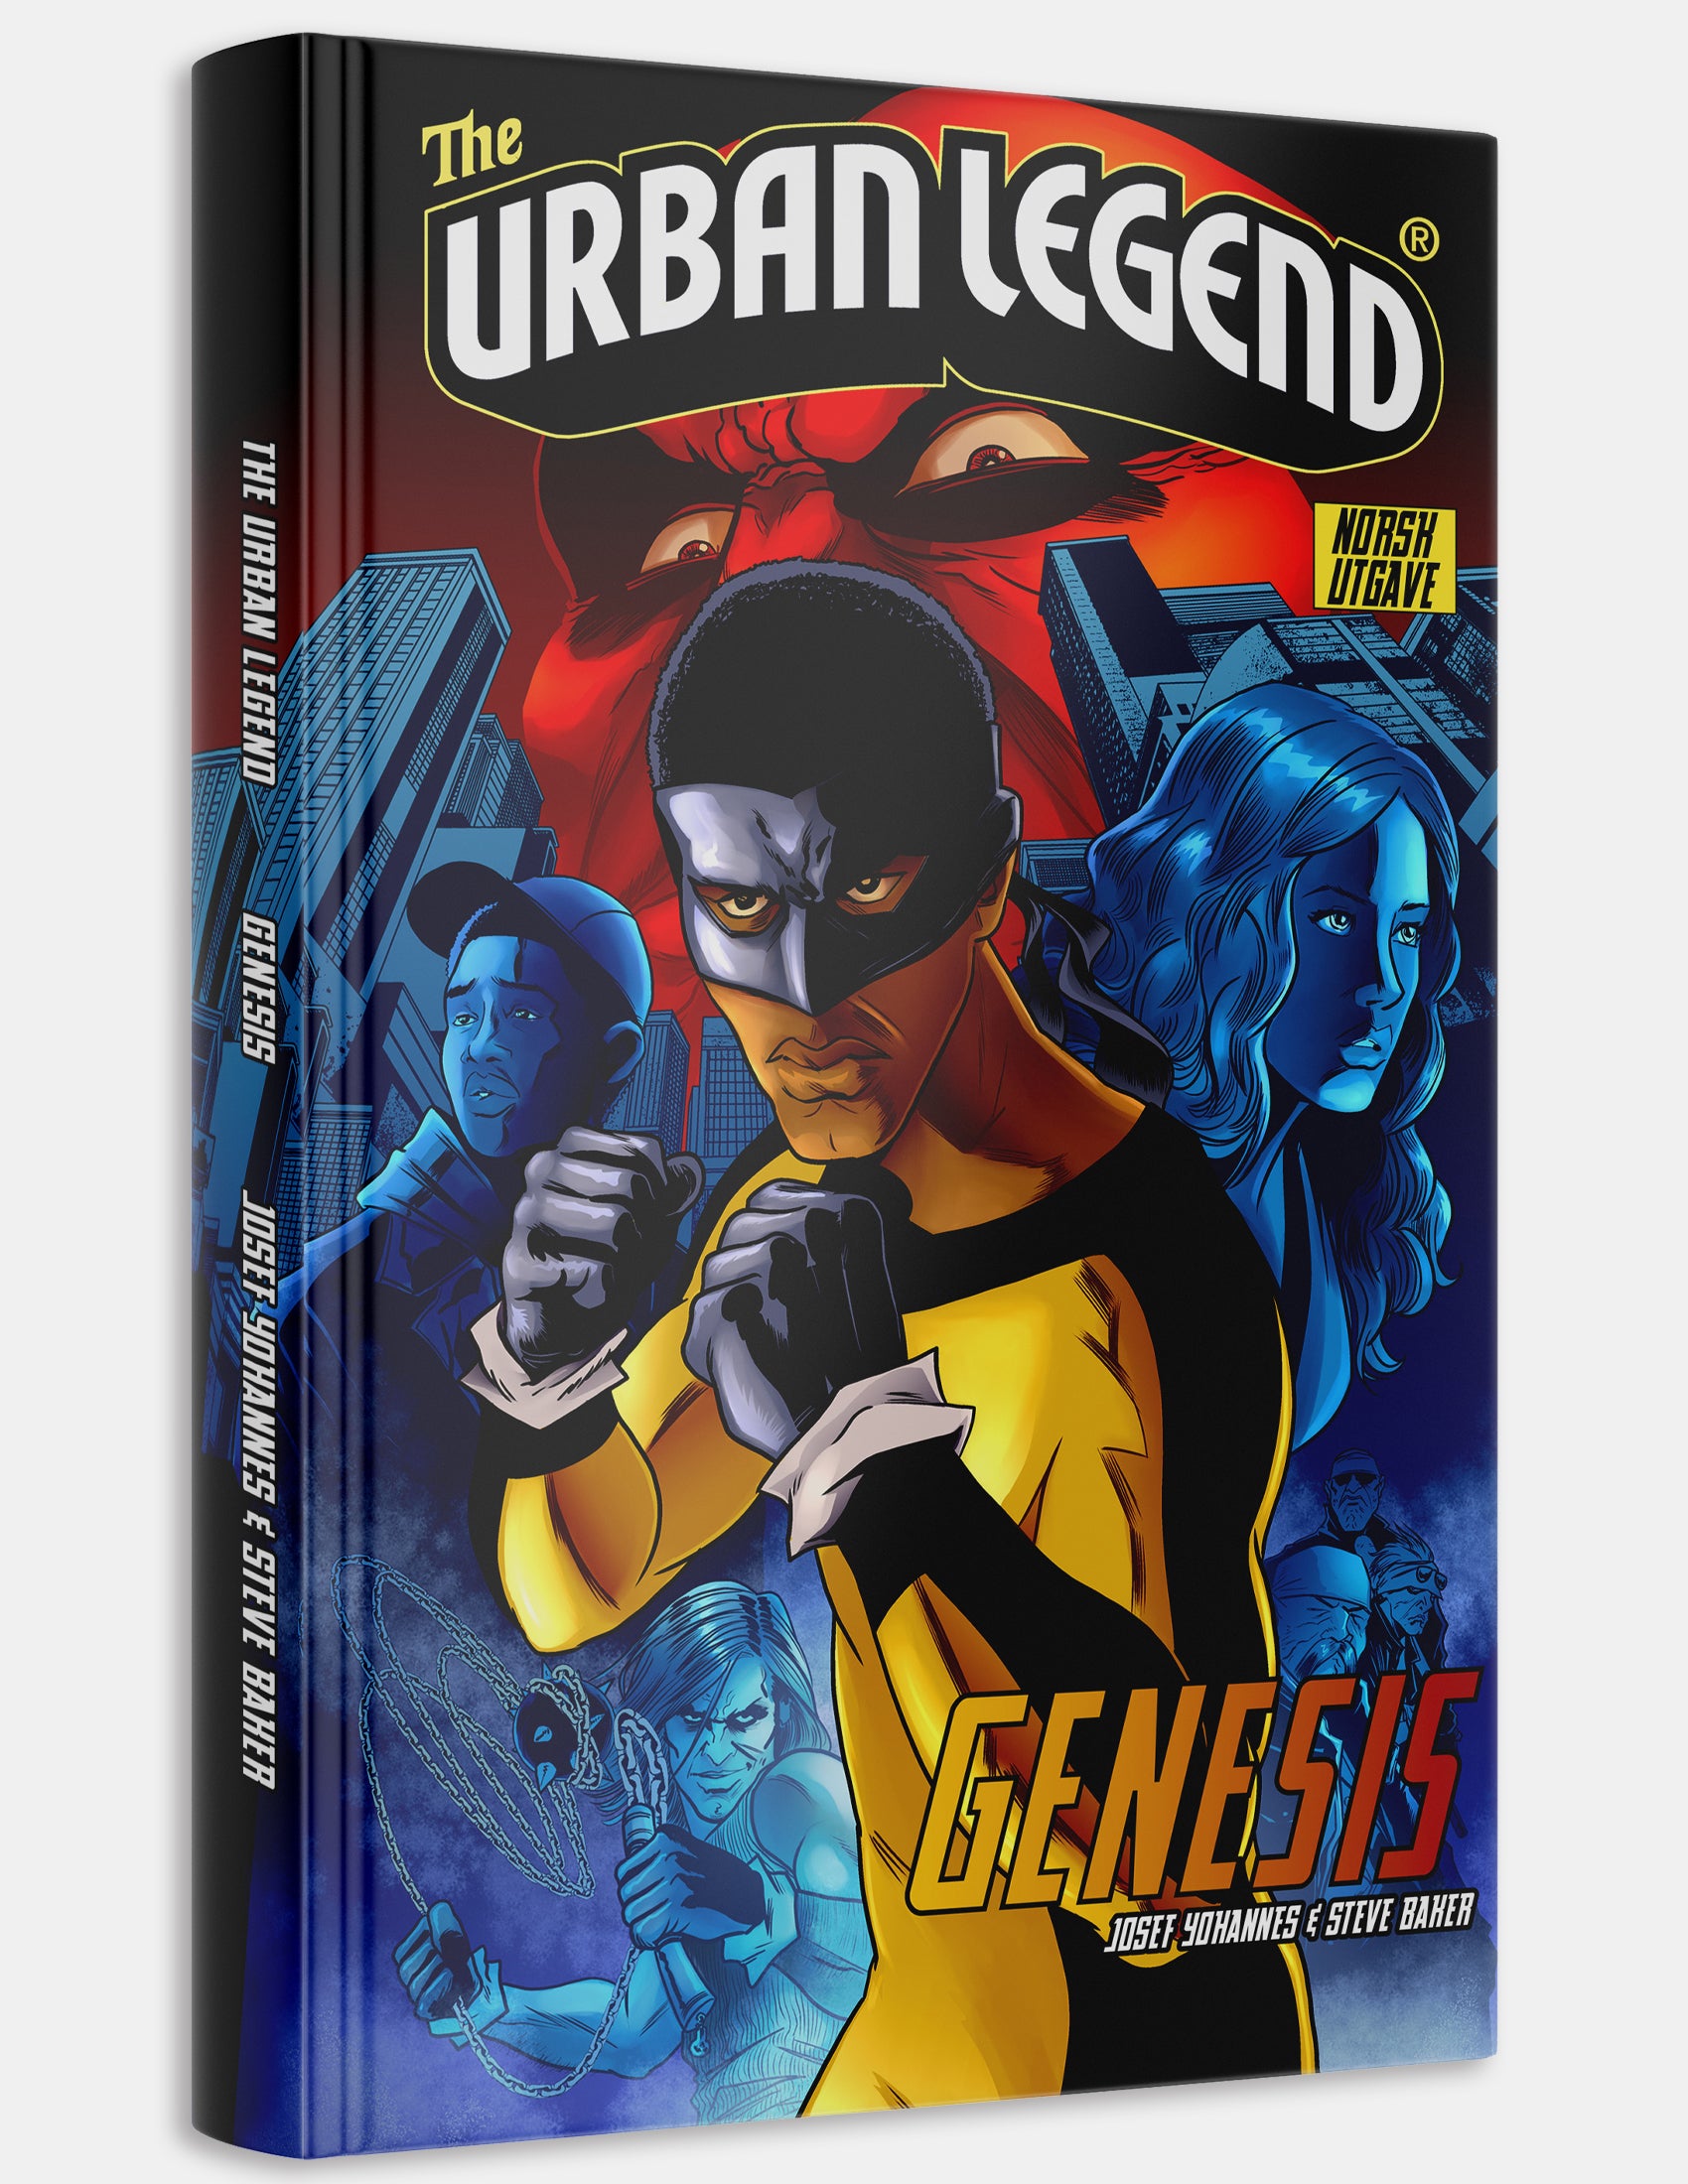 The Urban Legend - Genesis part 1 (Sesong 1 - Paperback)